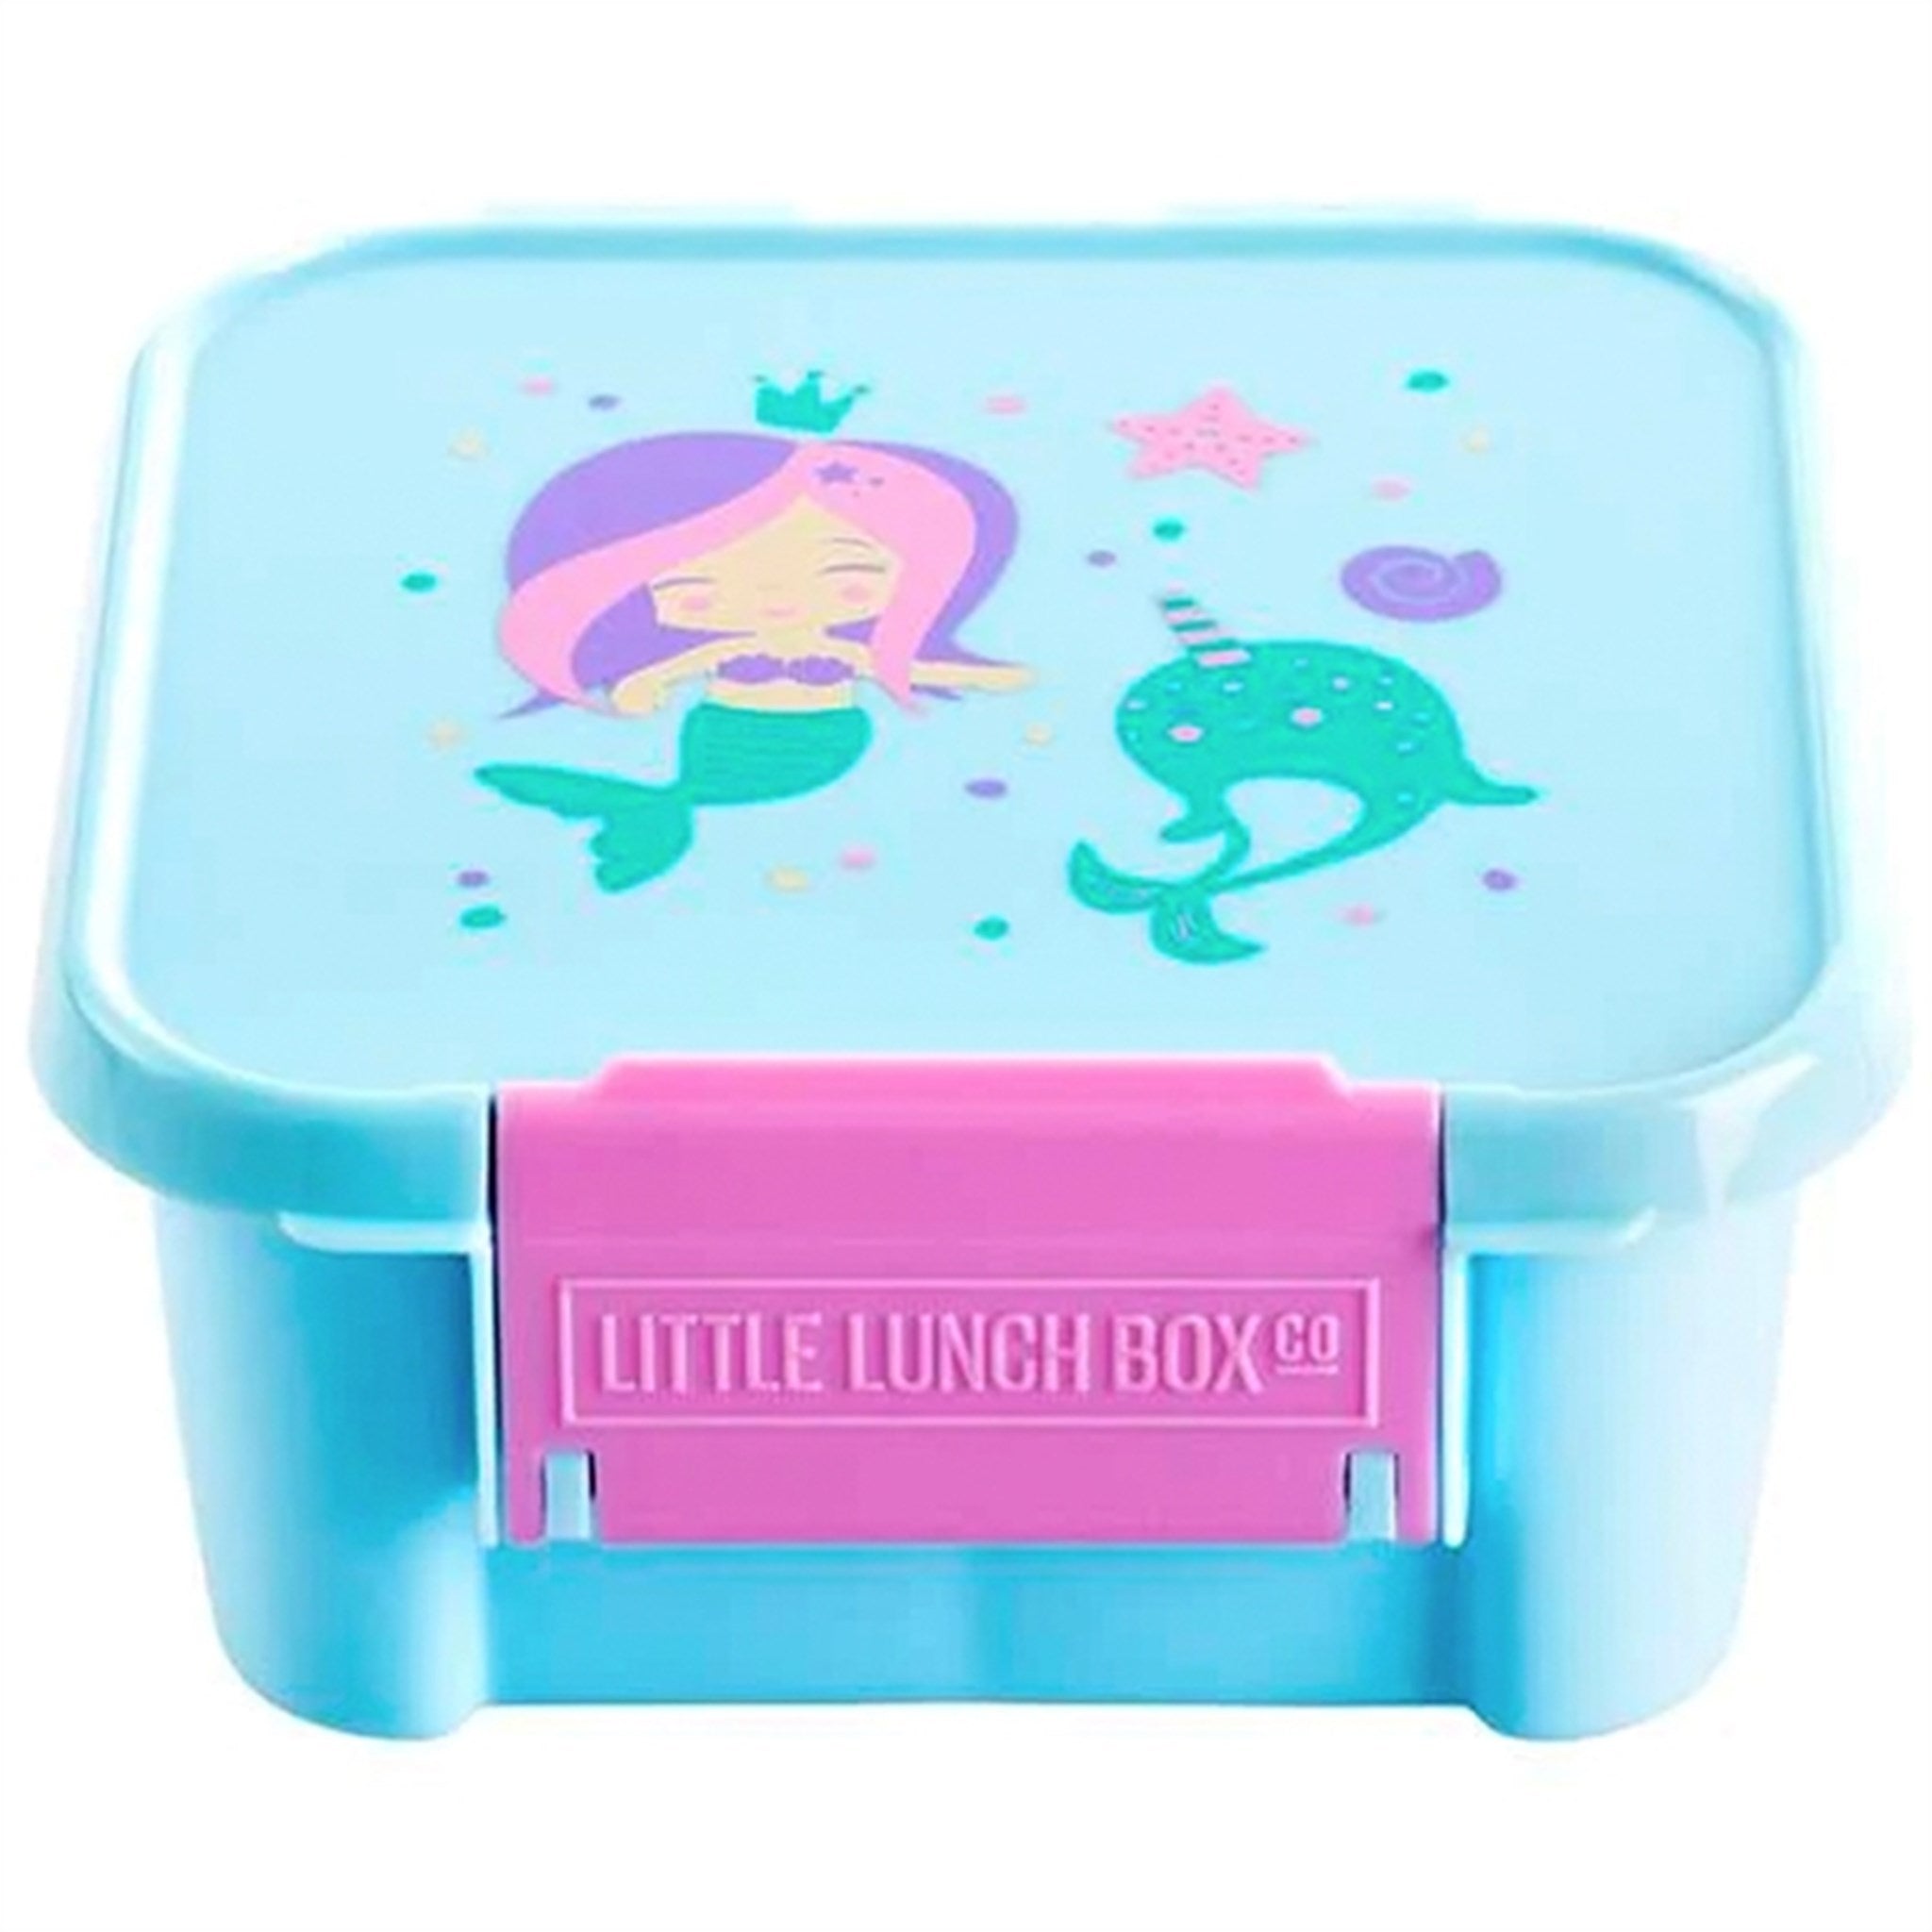 Little Lunch Box Co Bento 2 Lunch Box Mermaid Friends